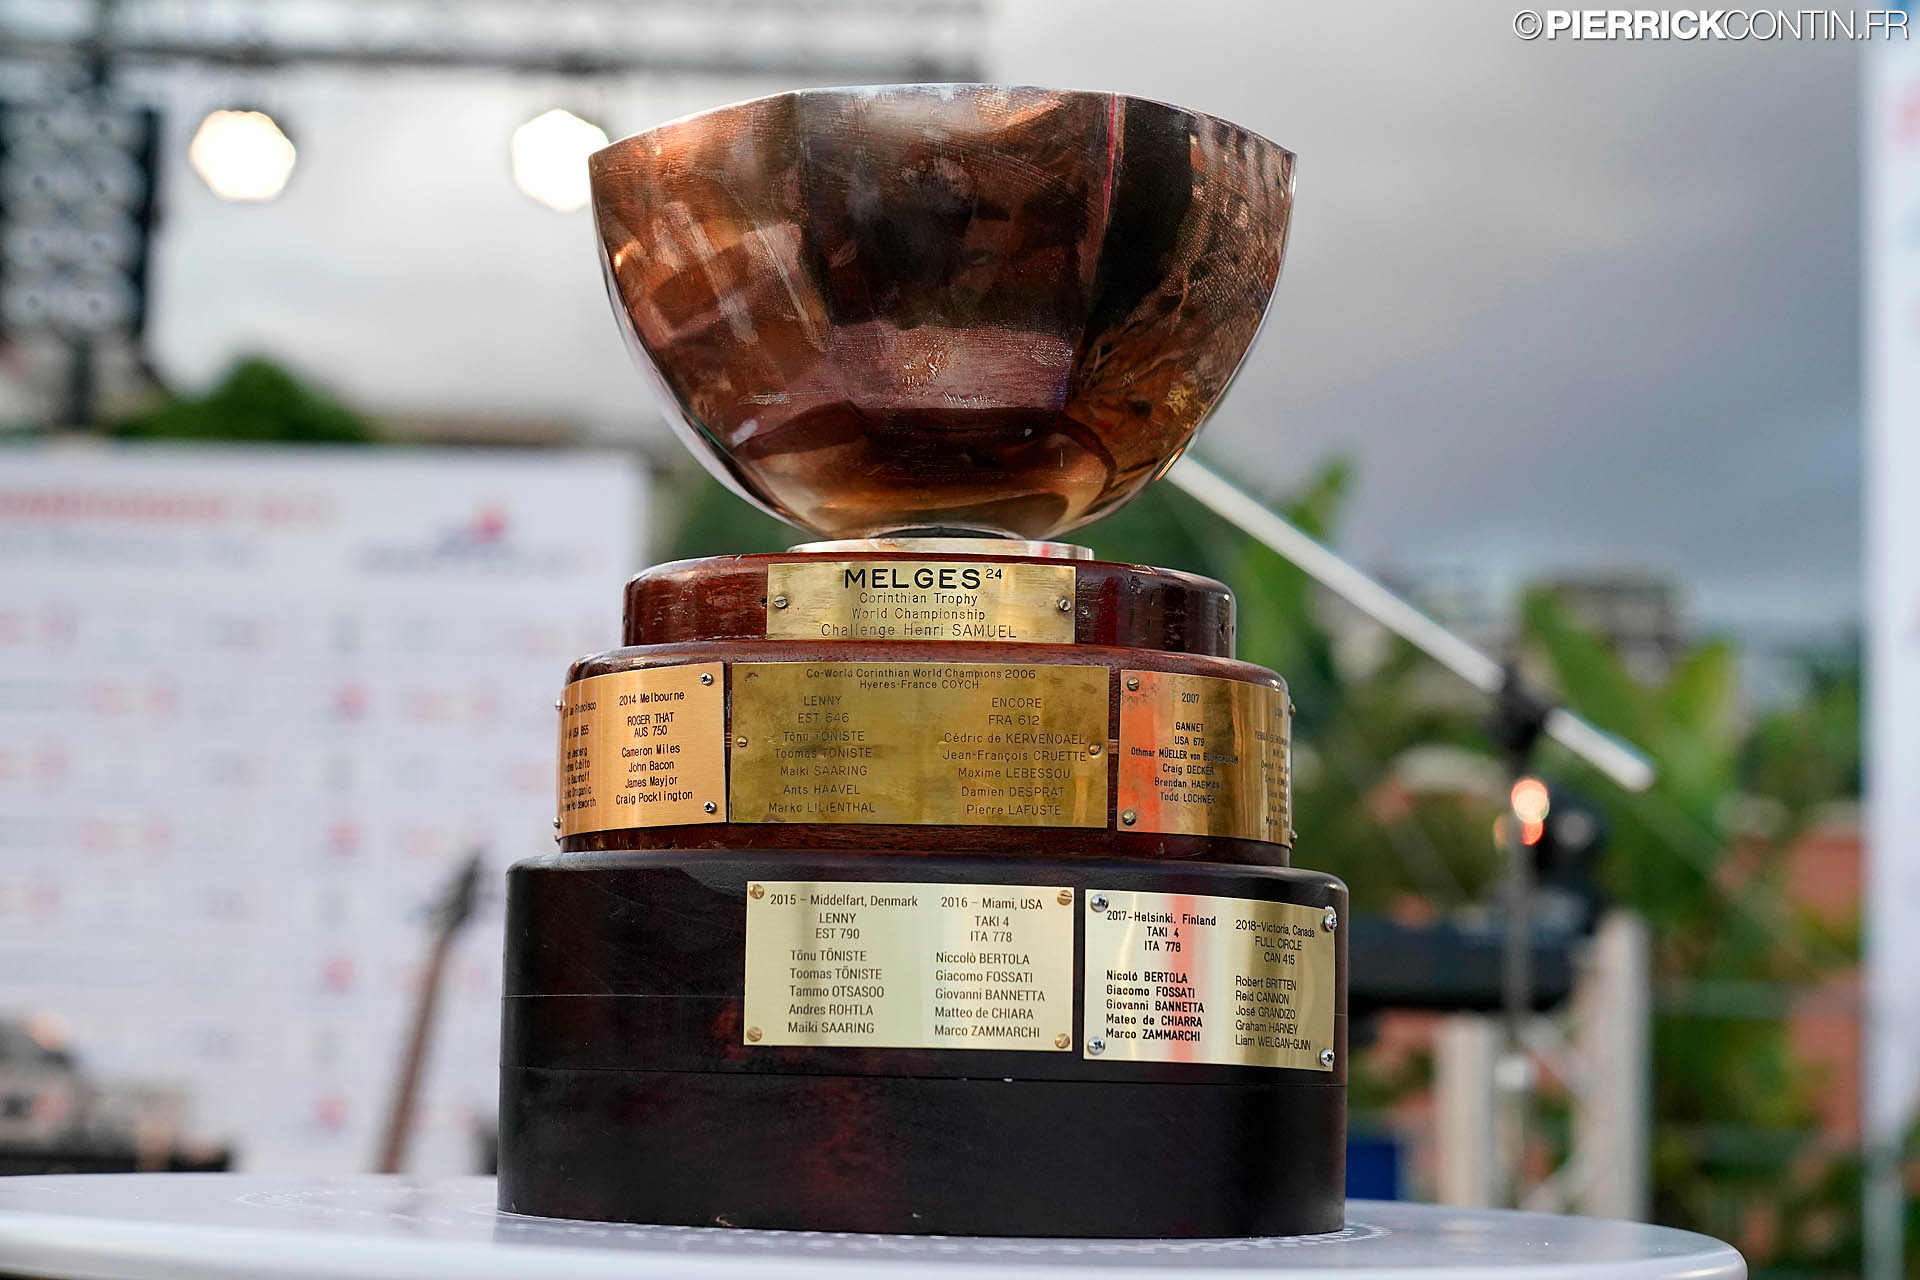 The Challenge Henri Samuel Corinthian World Championship Trophy